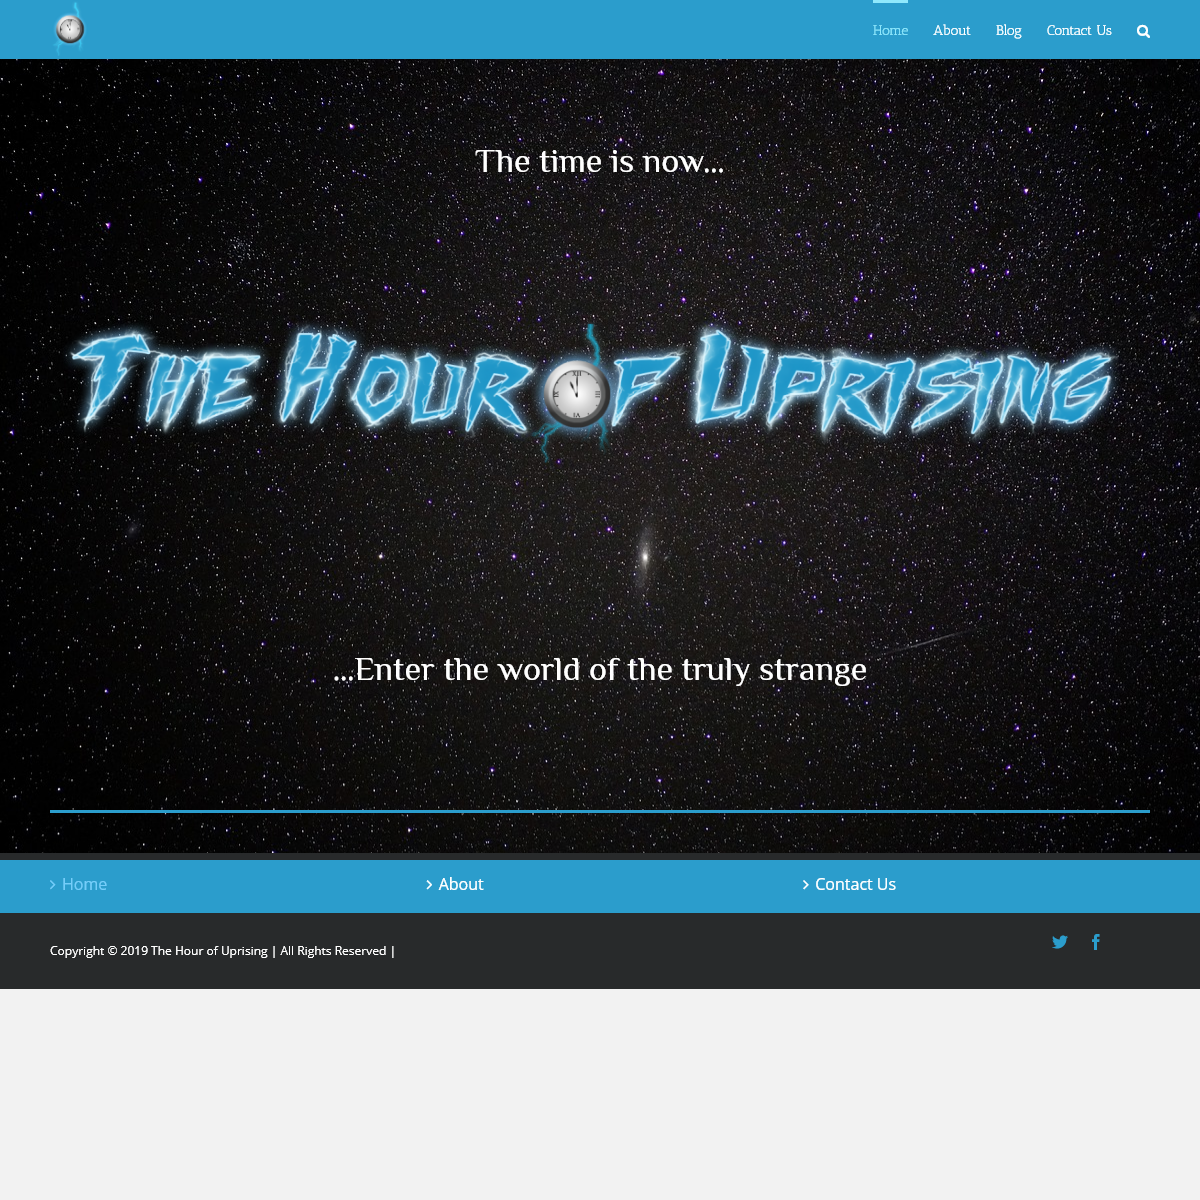 A complete backup of hourofuprising.com